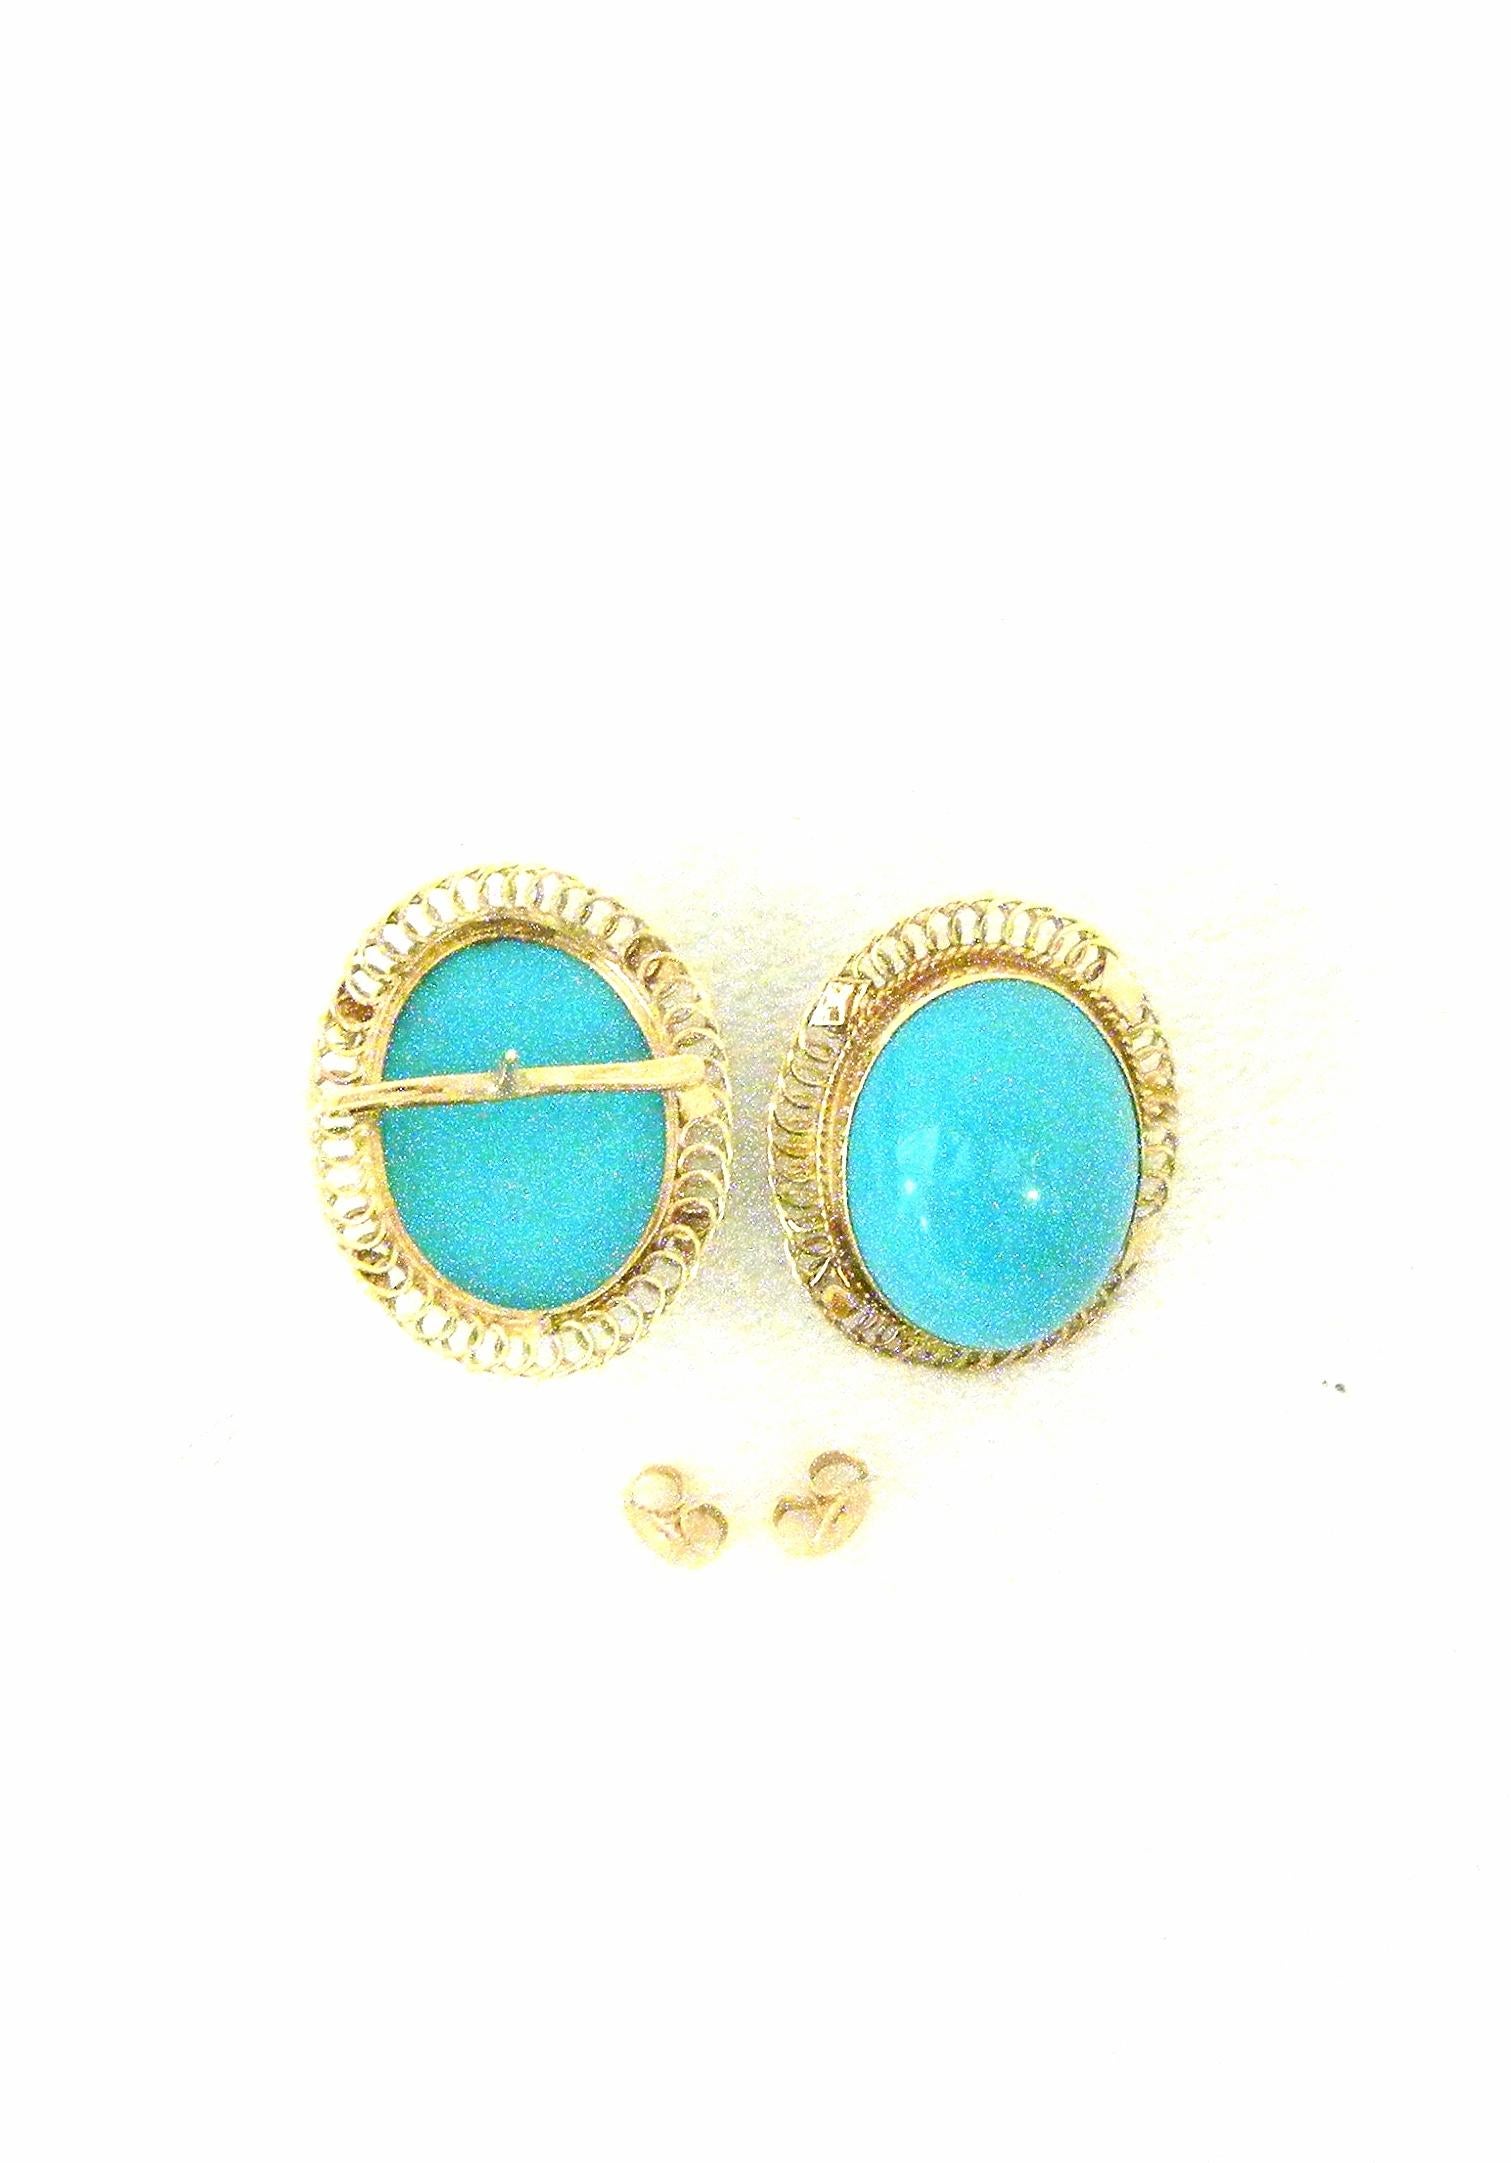 Contemporary 14 Karat Framed Persian Turquoise Pierced Earrings